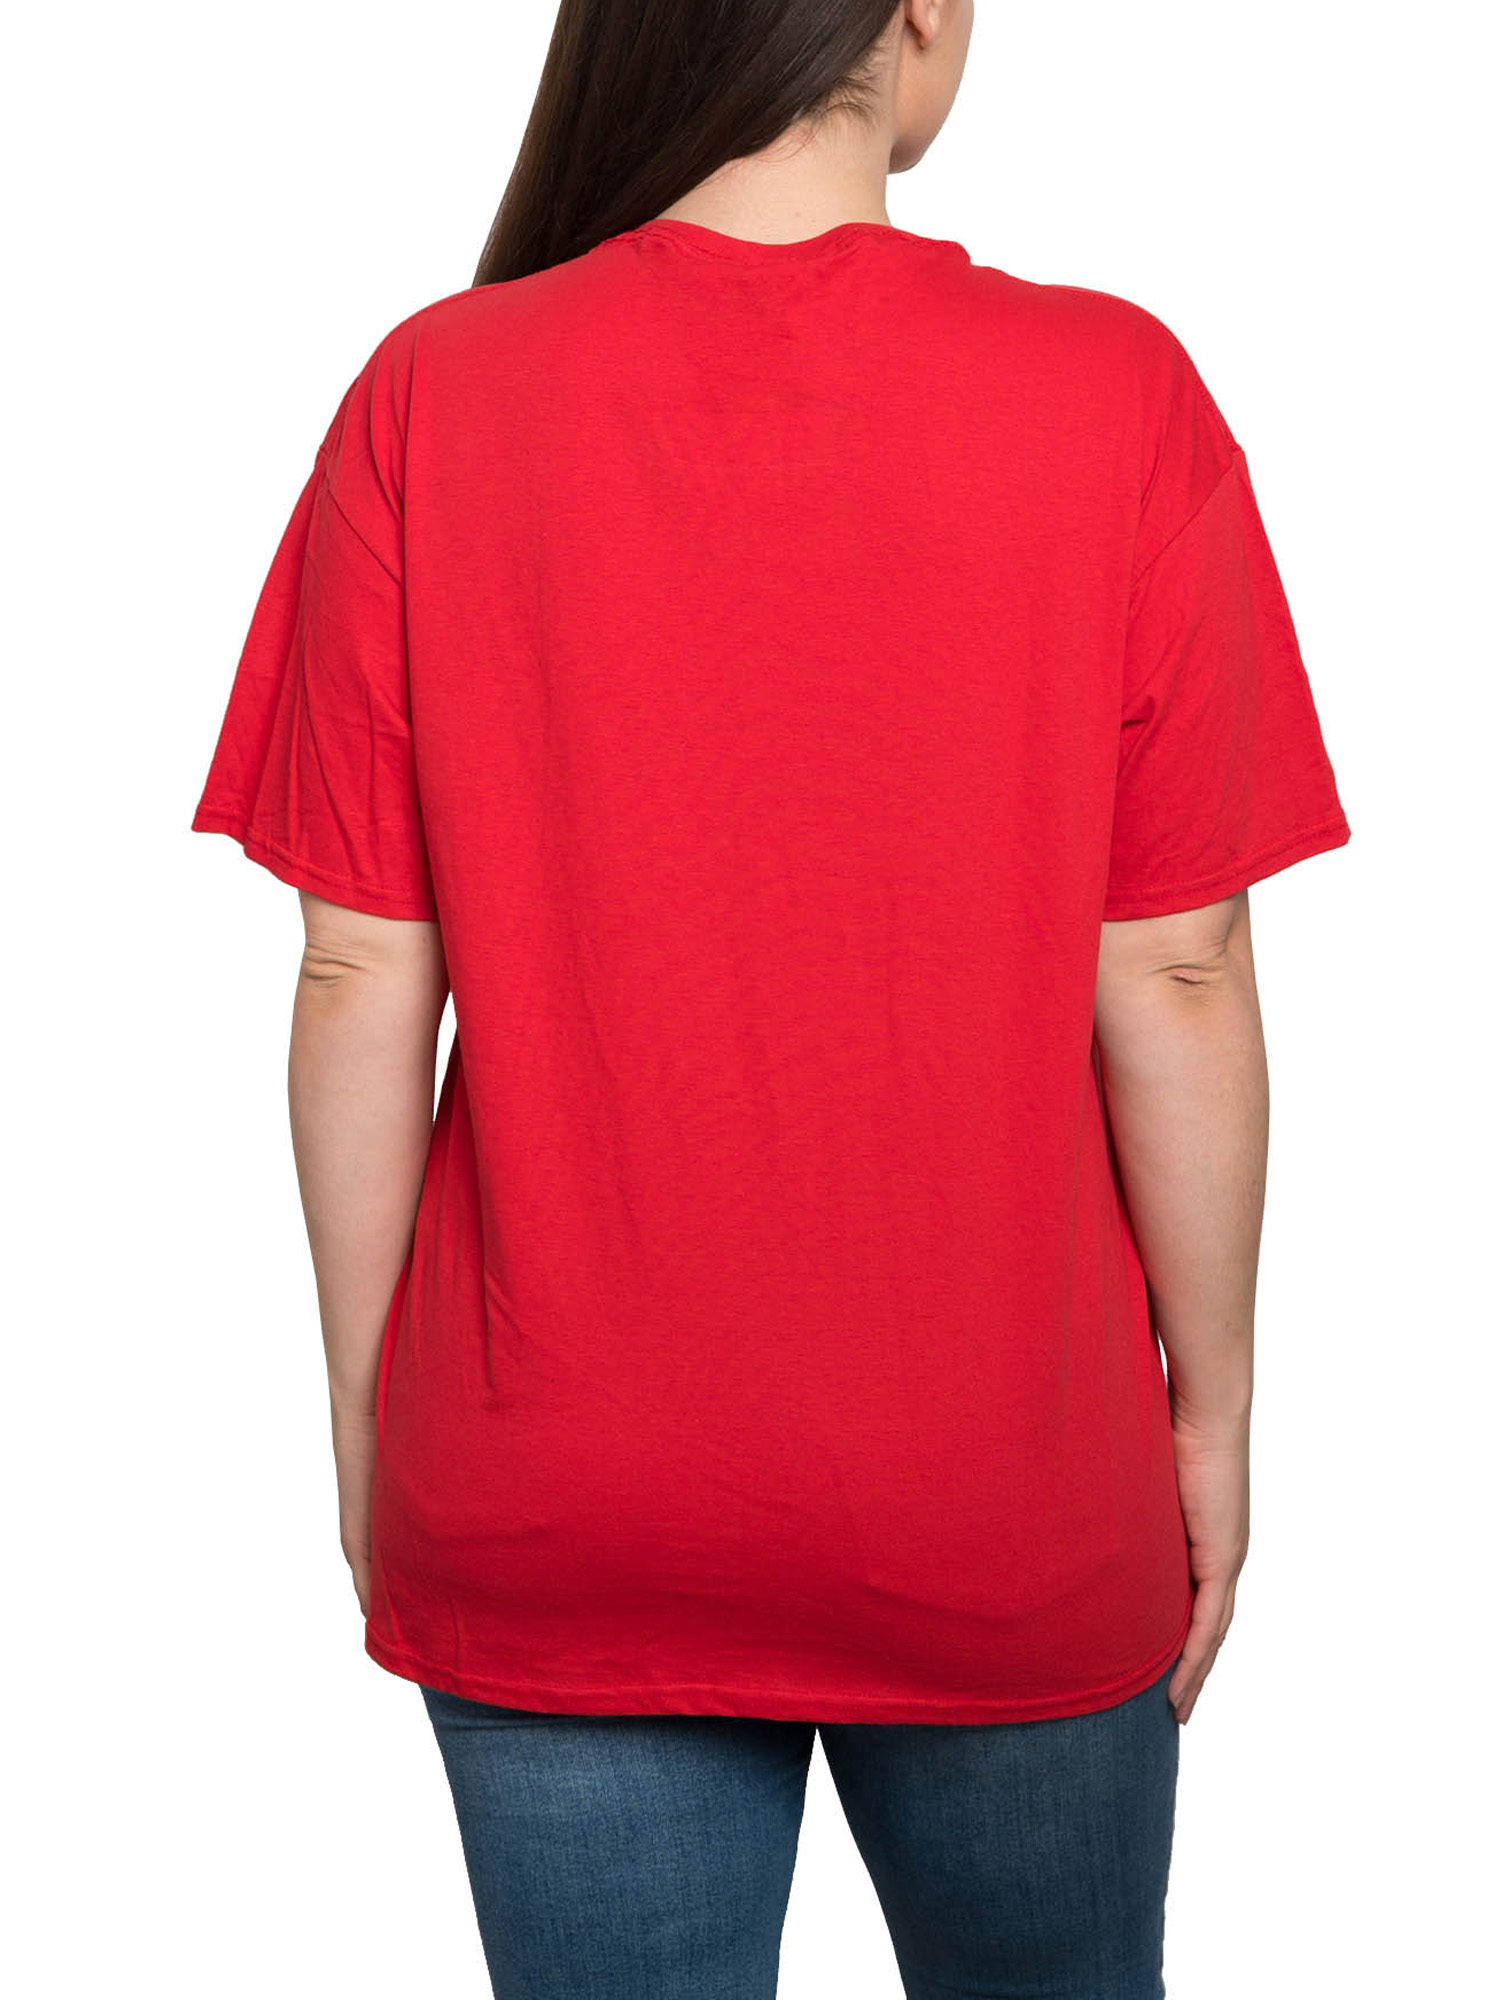 DC Comics Wonder Woman Short Sleeve T-Shirt Red (Women's Plus) - image 3 of 4